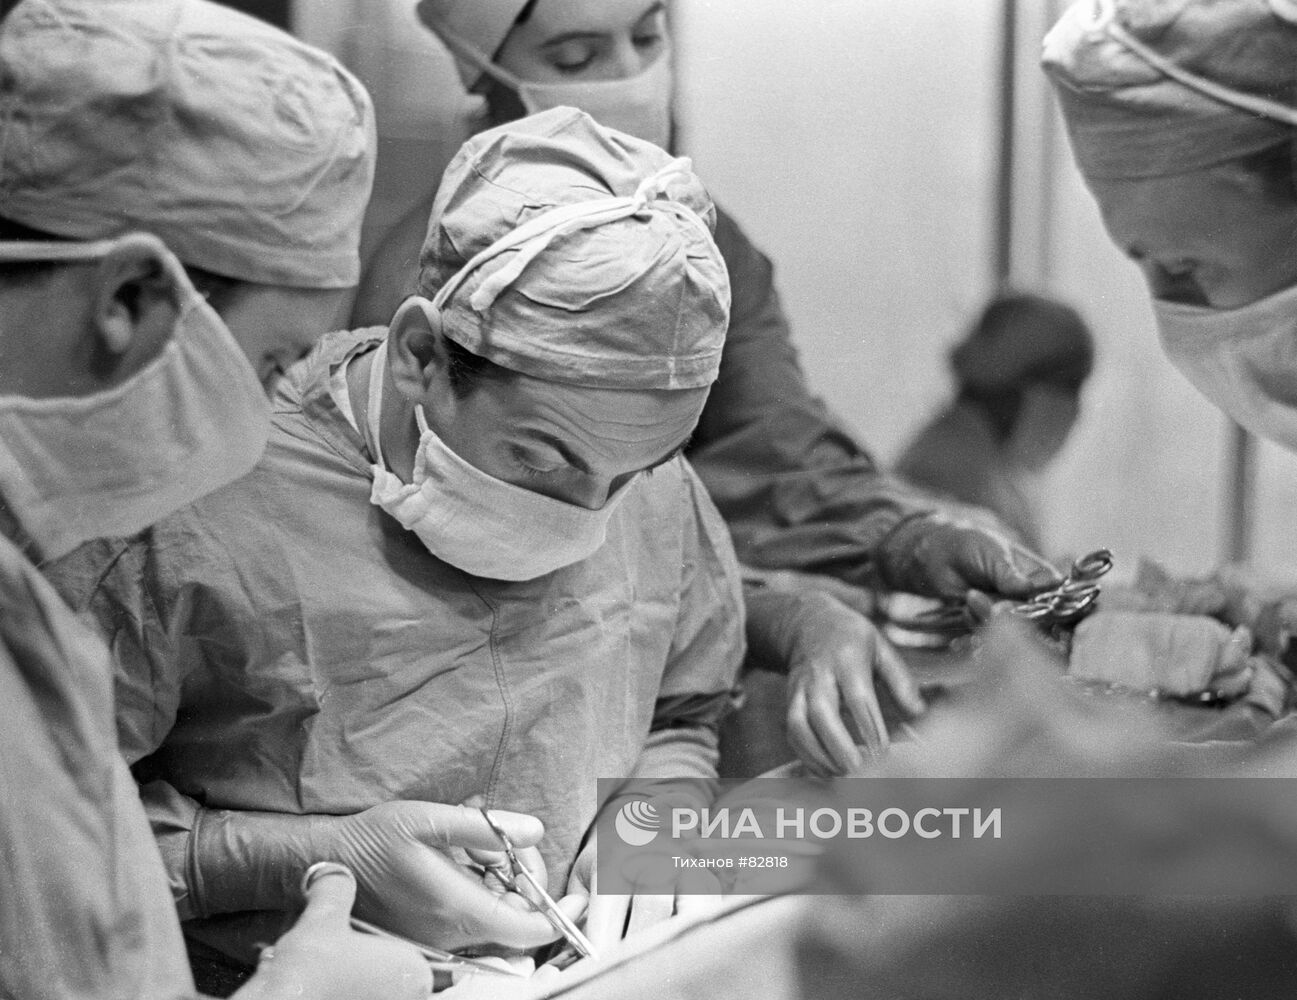 Профессор Глеб Соловьев ведет операцию на сердце